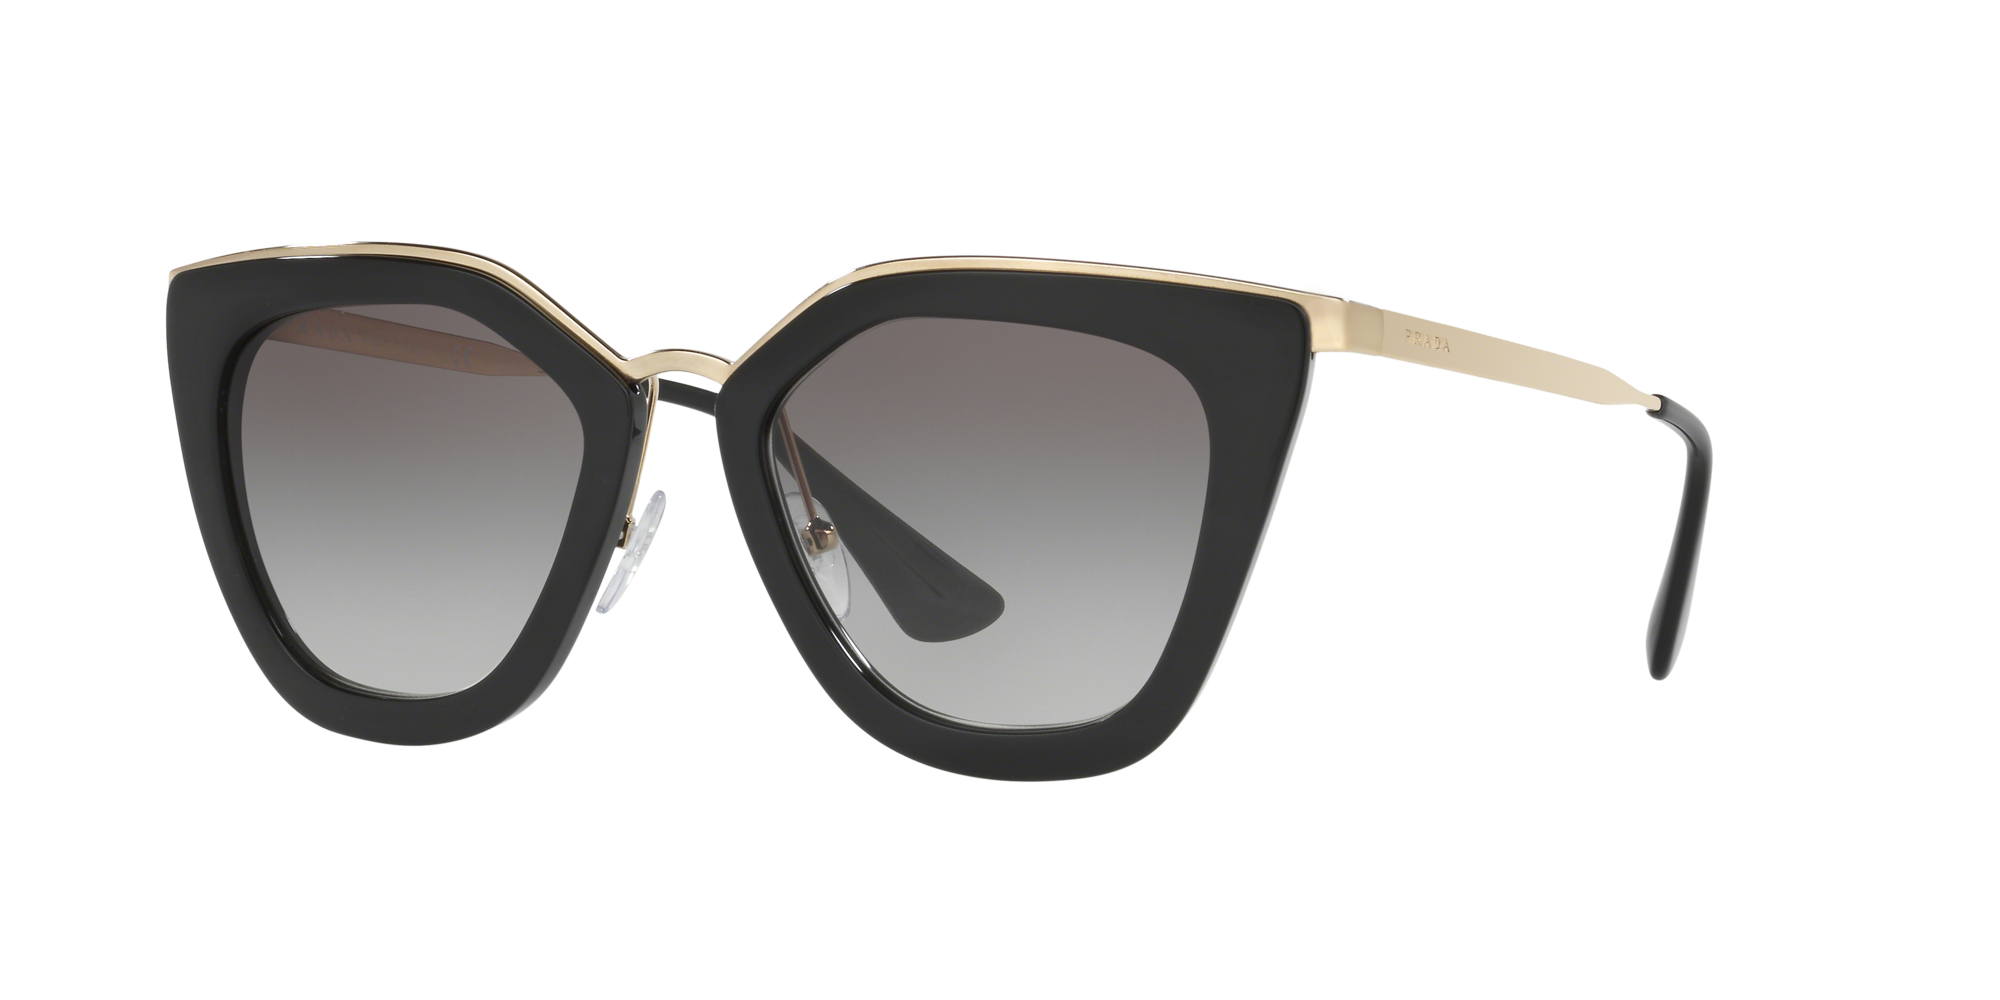 prada sunglasses outlet online